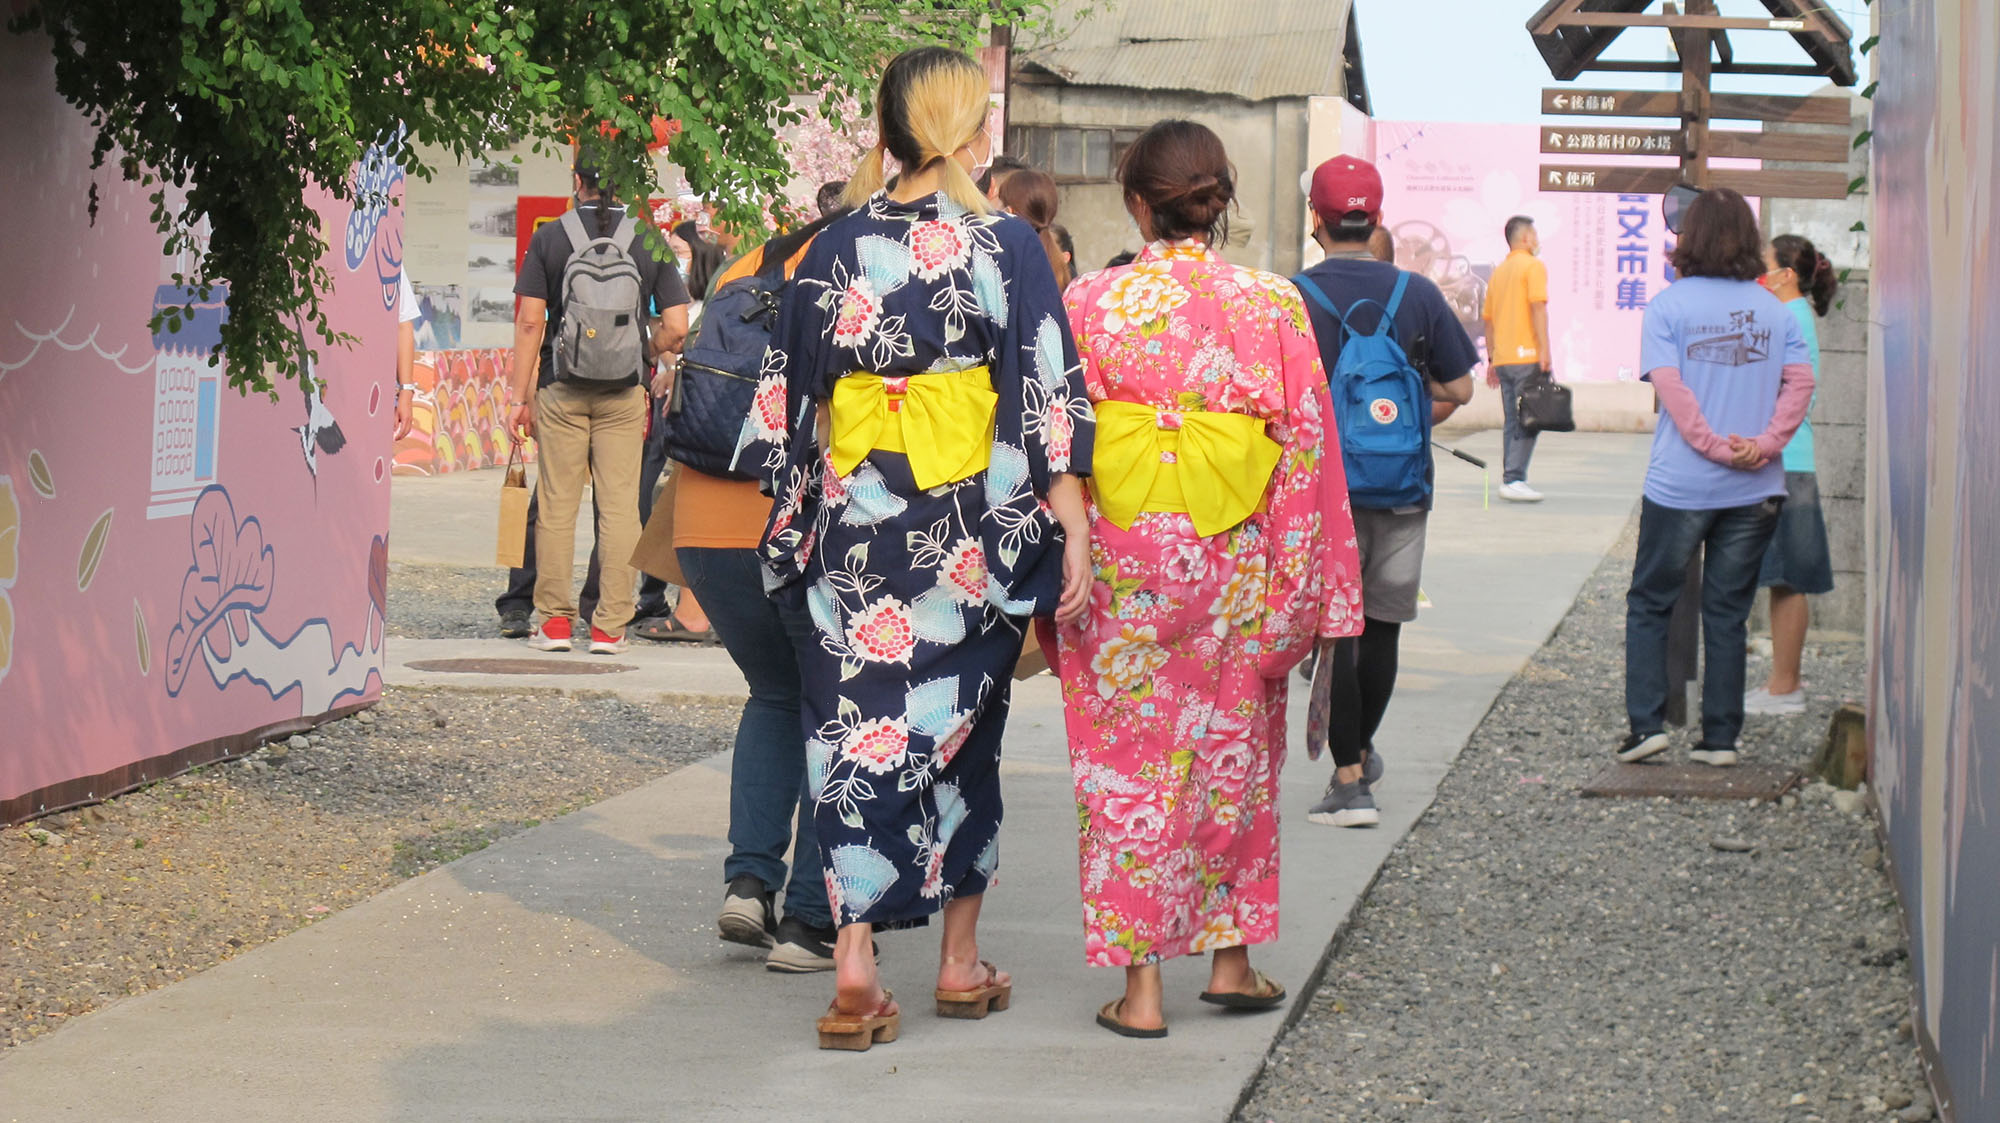 Two girls, clad in kimonos